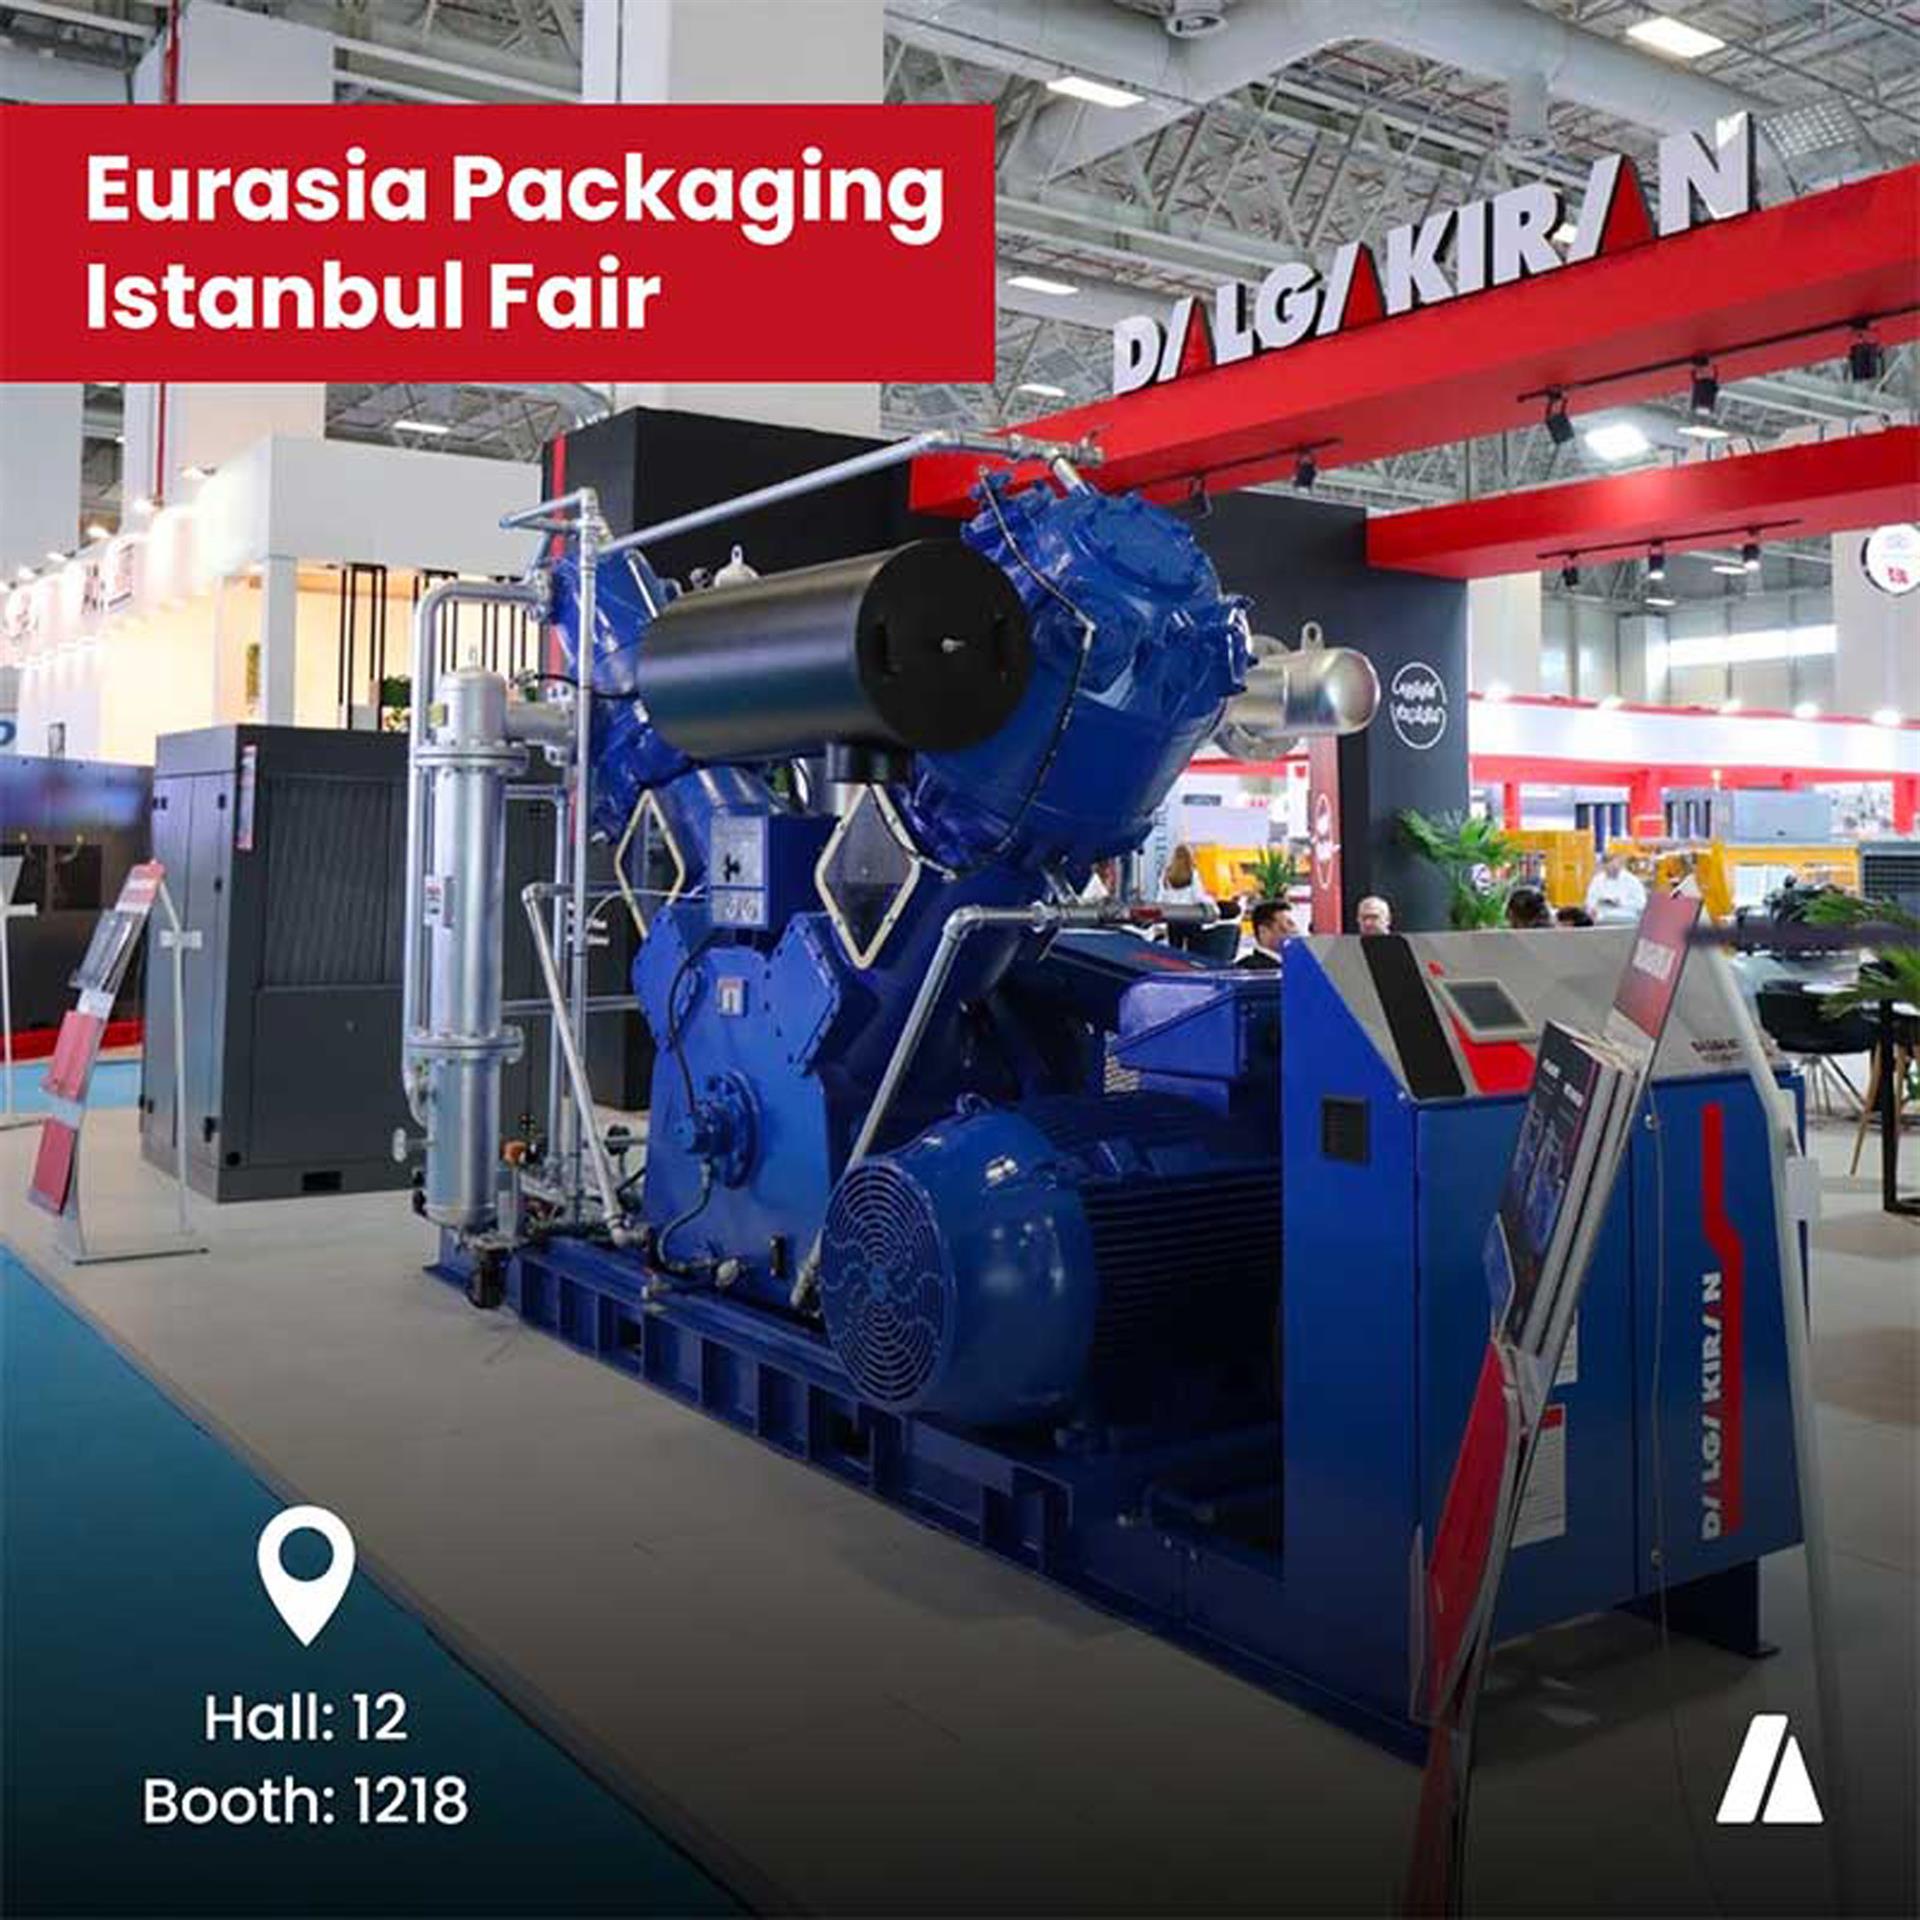 Dalgakıran Kompresör is at Eurasia's Largest Packaging Industry Fair